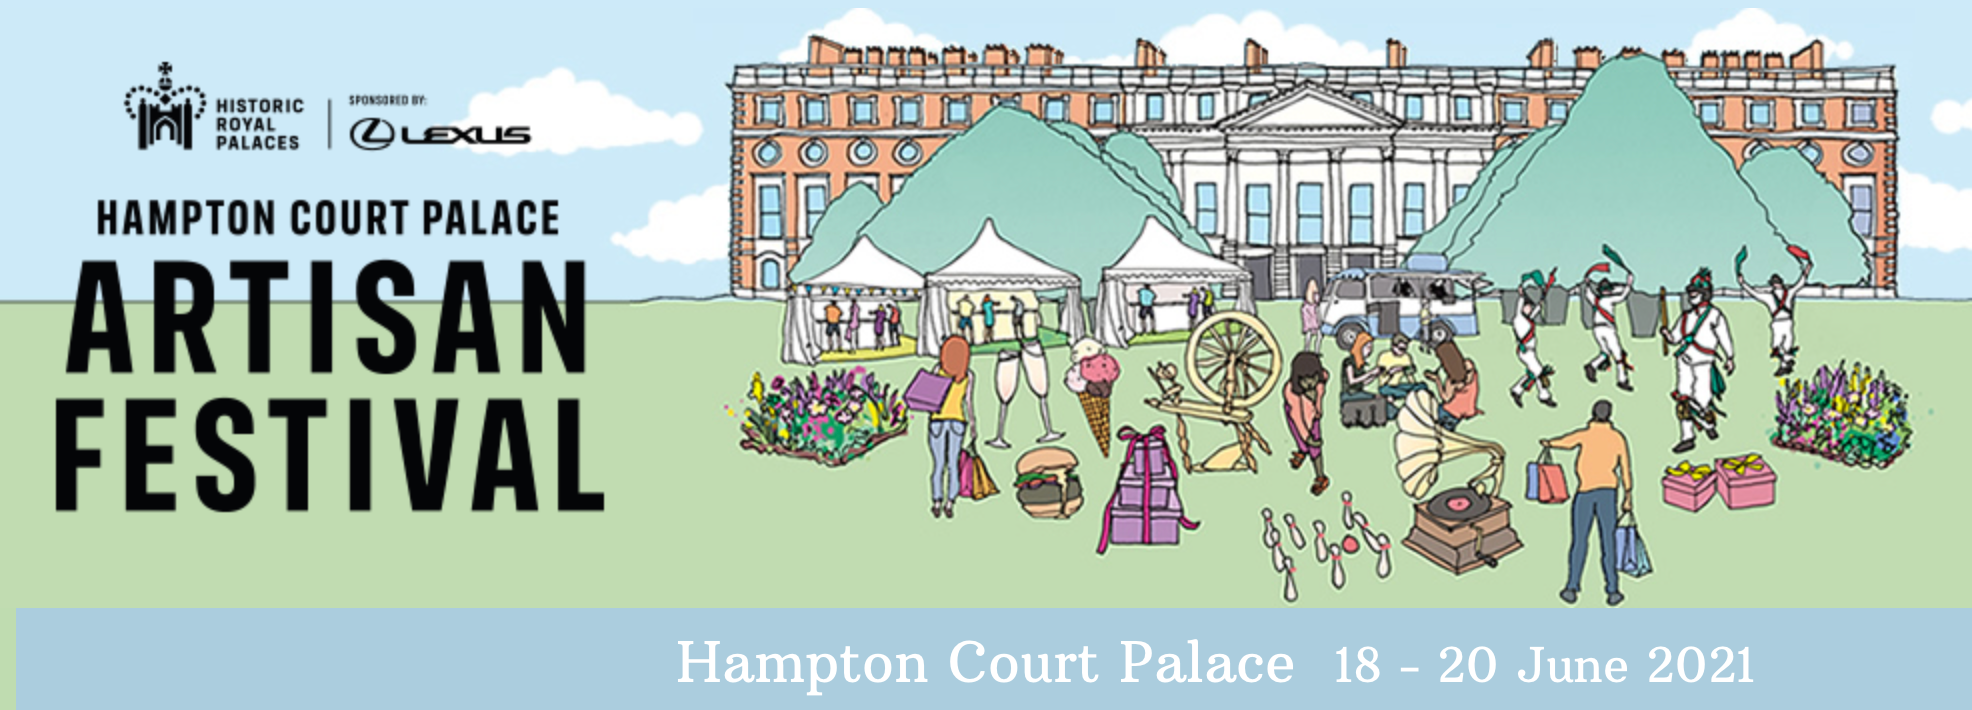 Artisan Festival Workshops - Hampton Court Palace 18-20th June